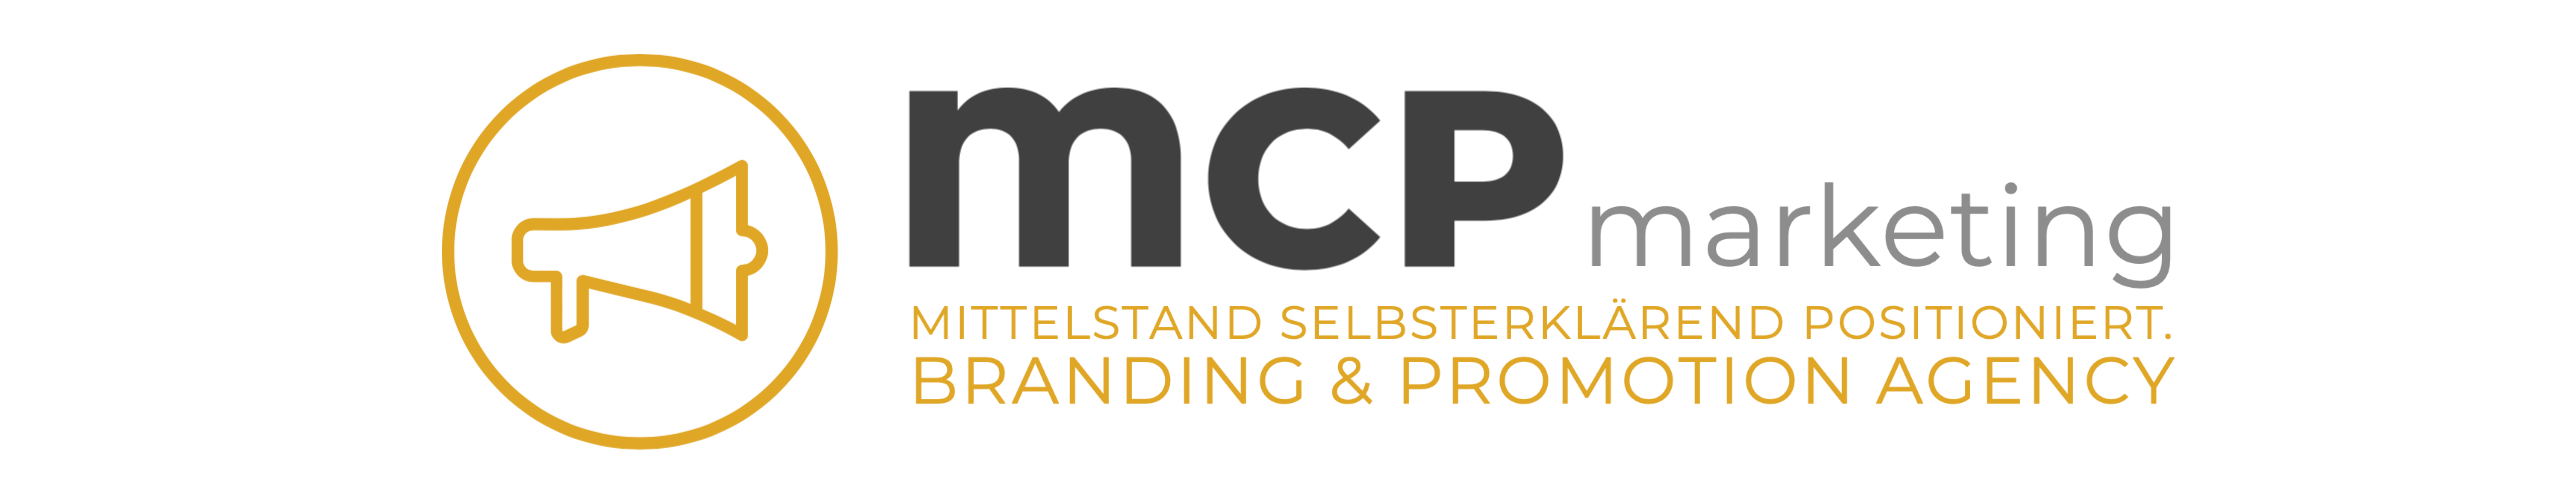 MCP marketing 4 cicd-4